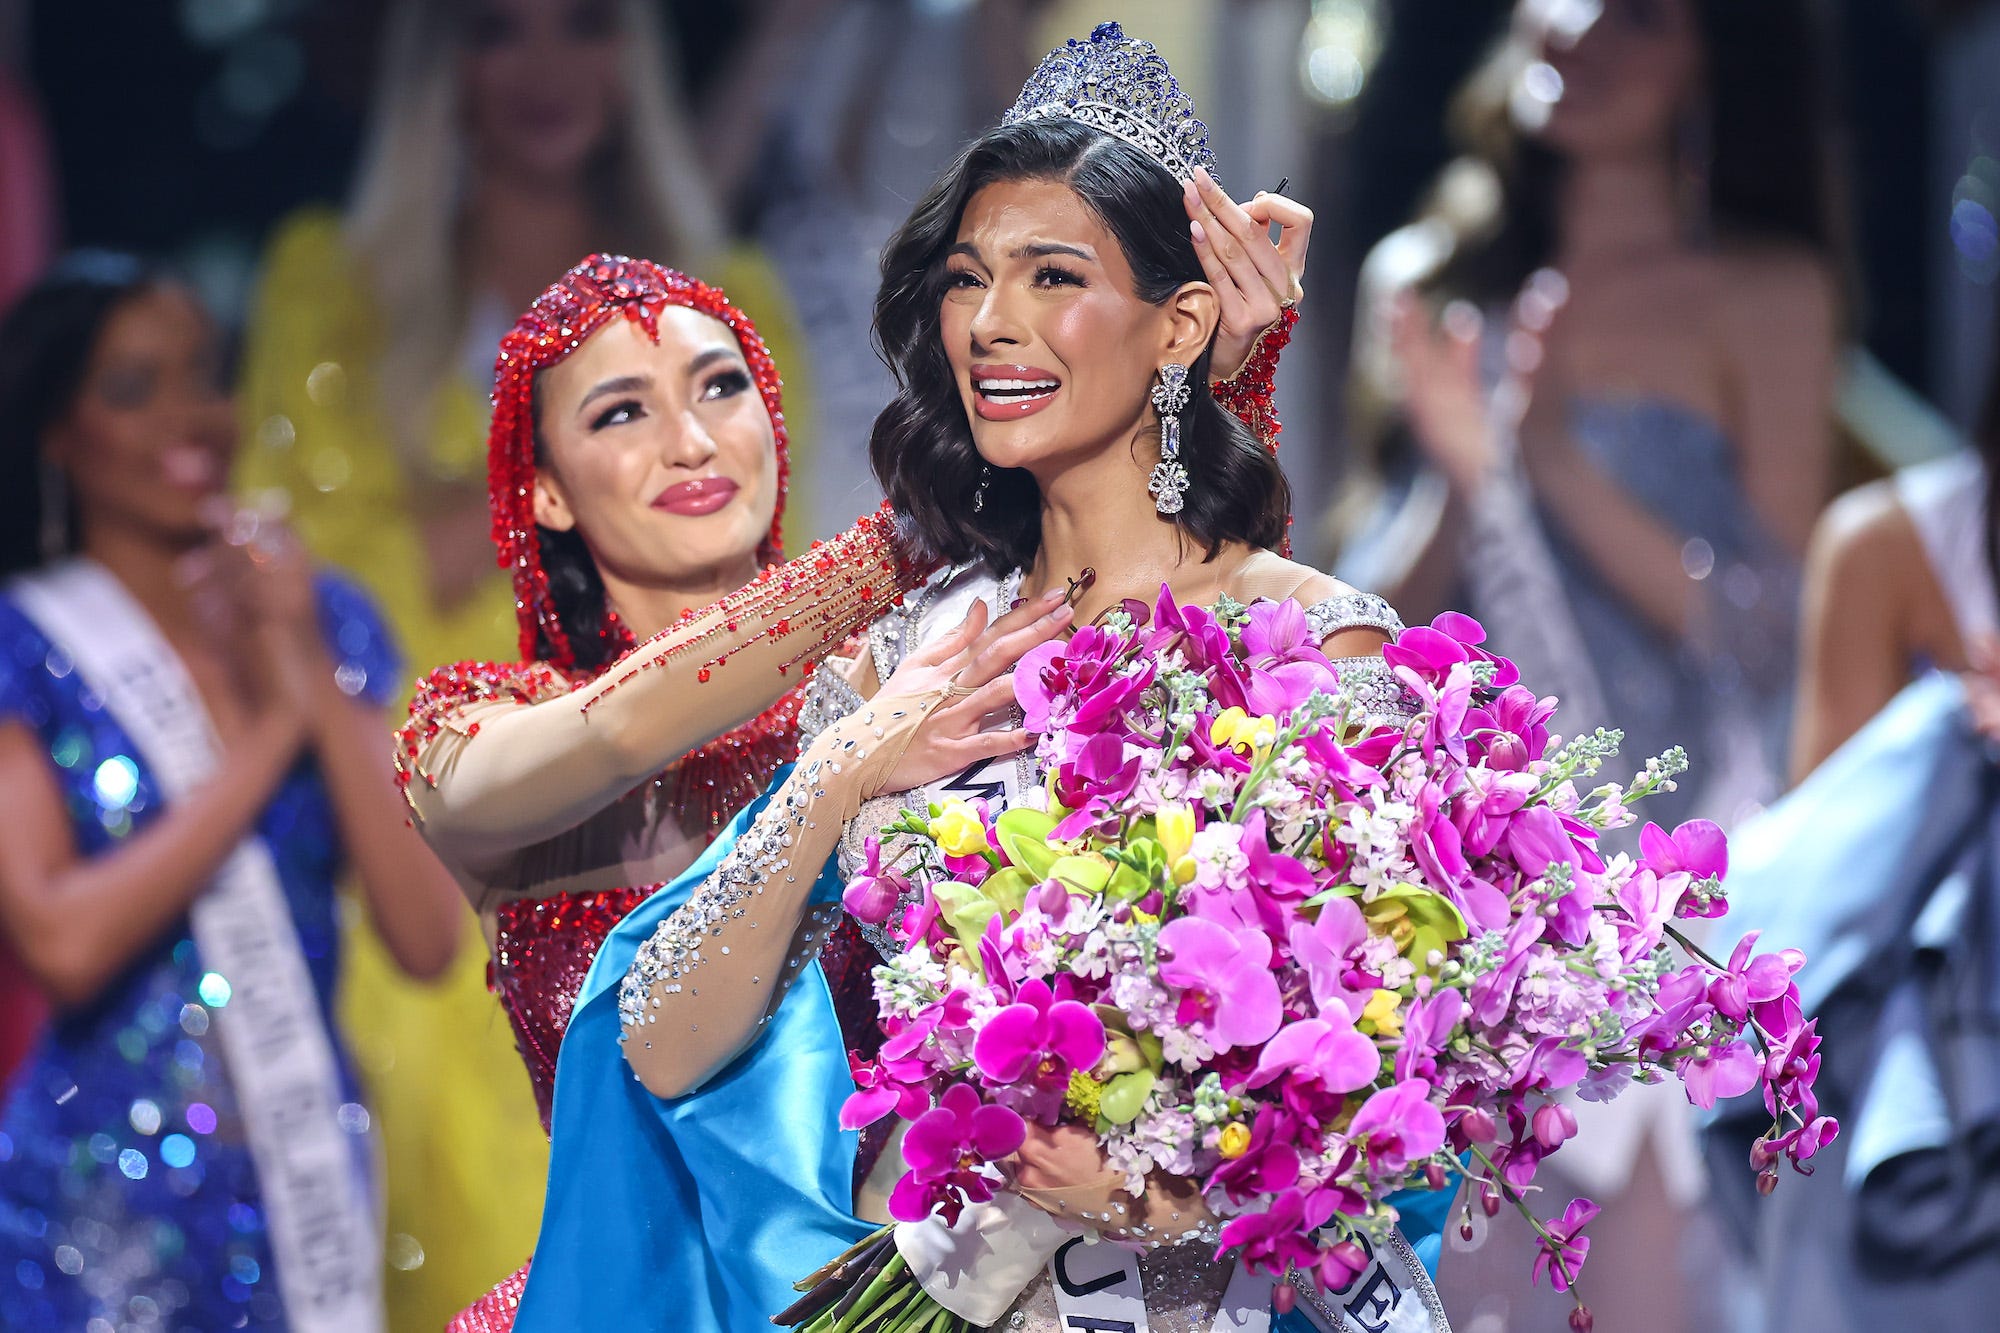 R'Bonney Gabriel krönt Miss Nicaragua Sheynnis Palacios zur neuen Miss Universe